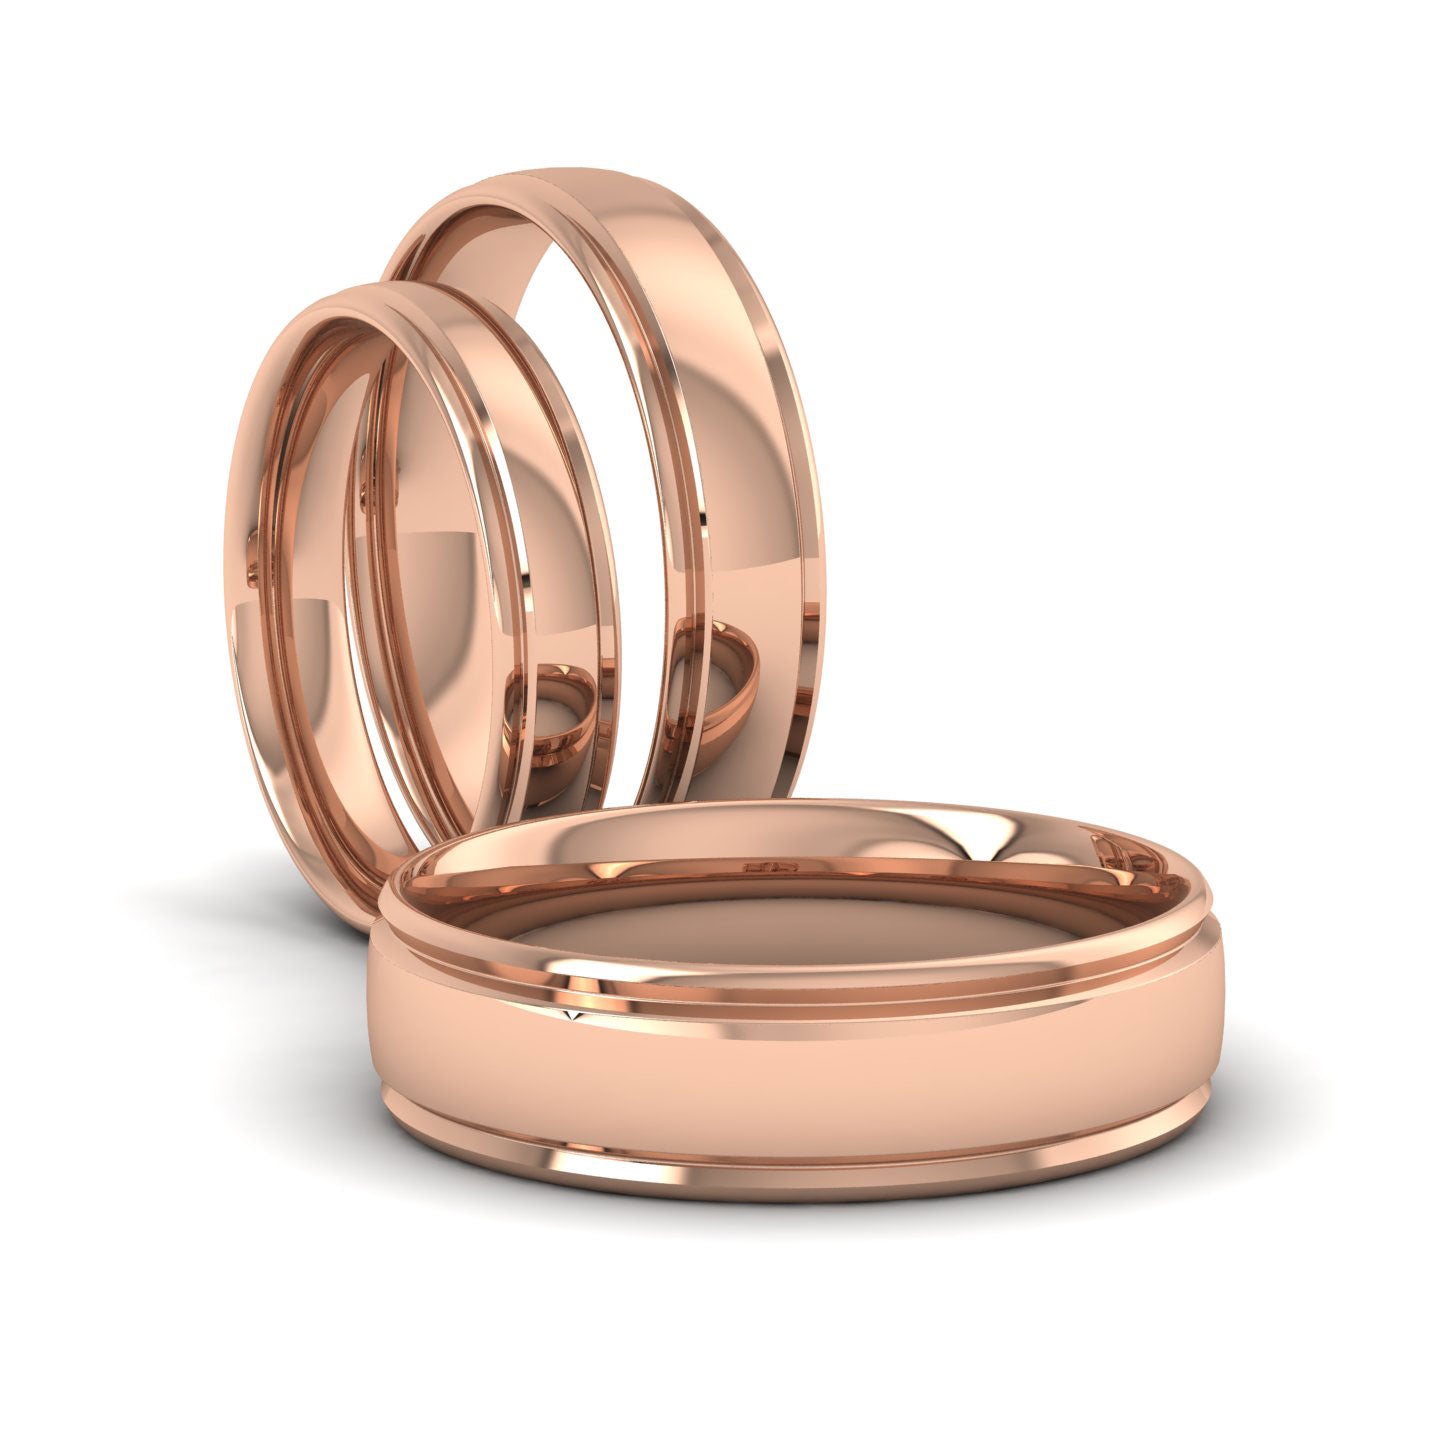 Edge Line Patterned 18ct Rose Gold 6mm Wedding Ring